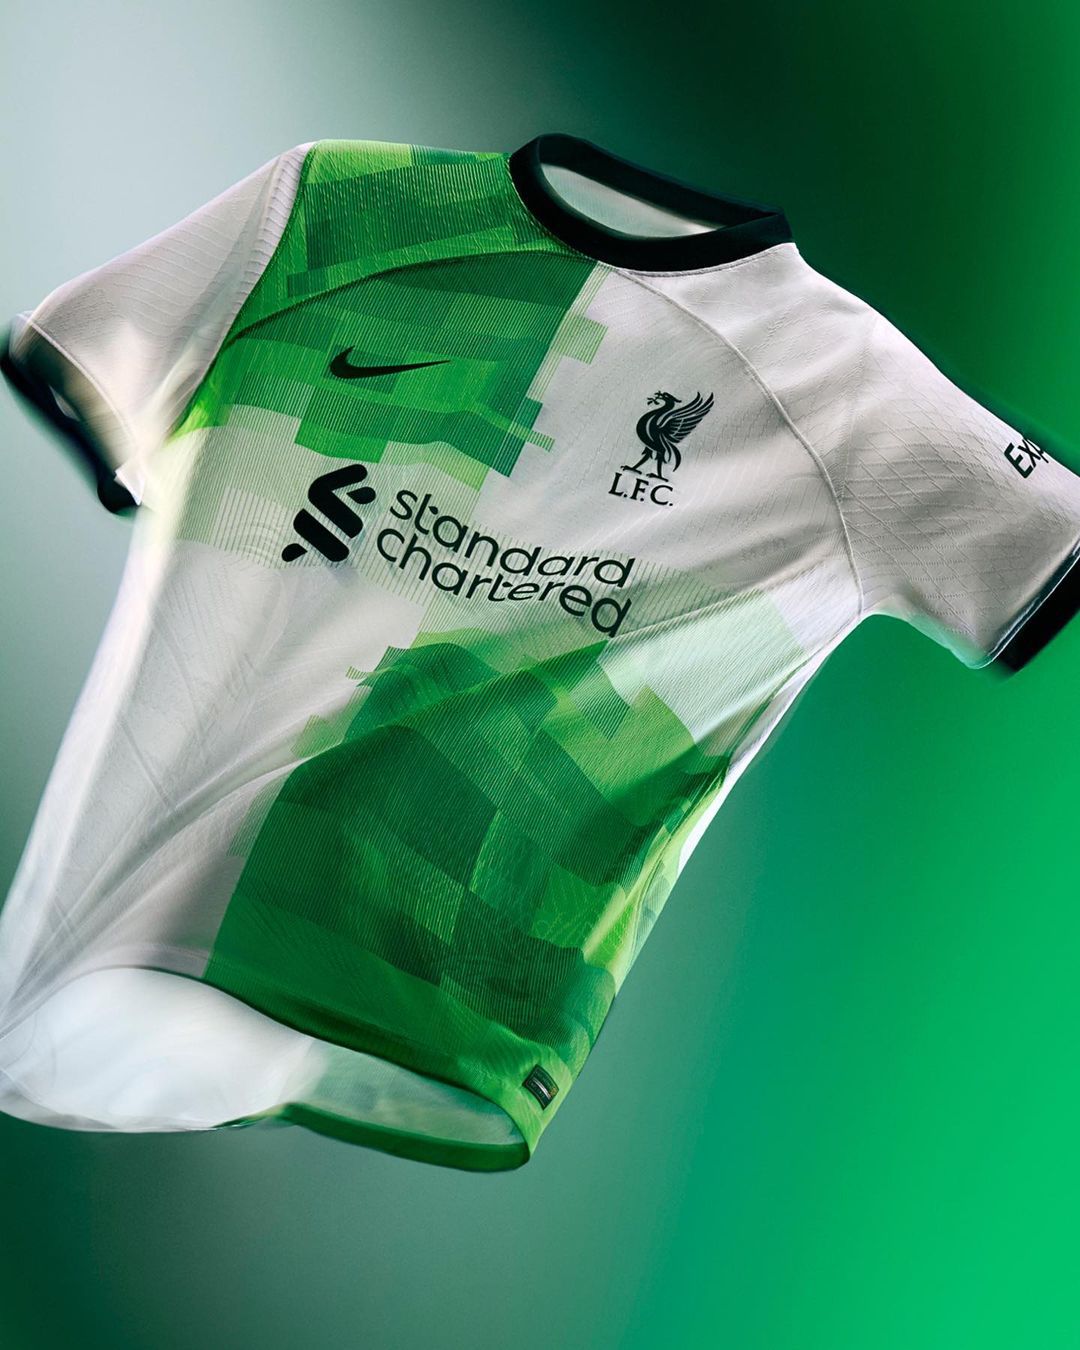 Salah models Liverpool's 'Super Eagles' Green and white away kit